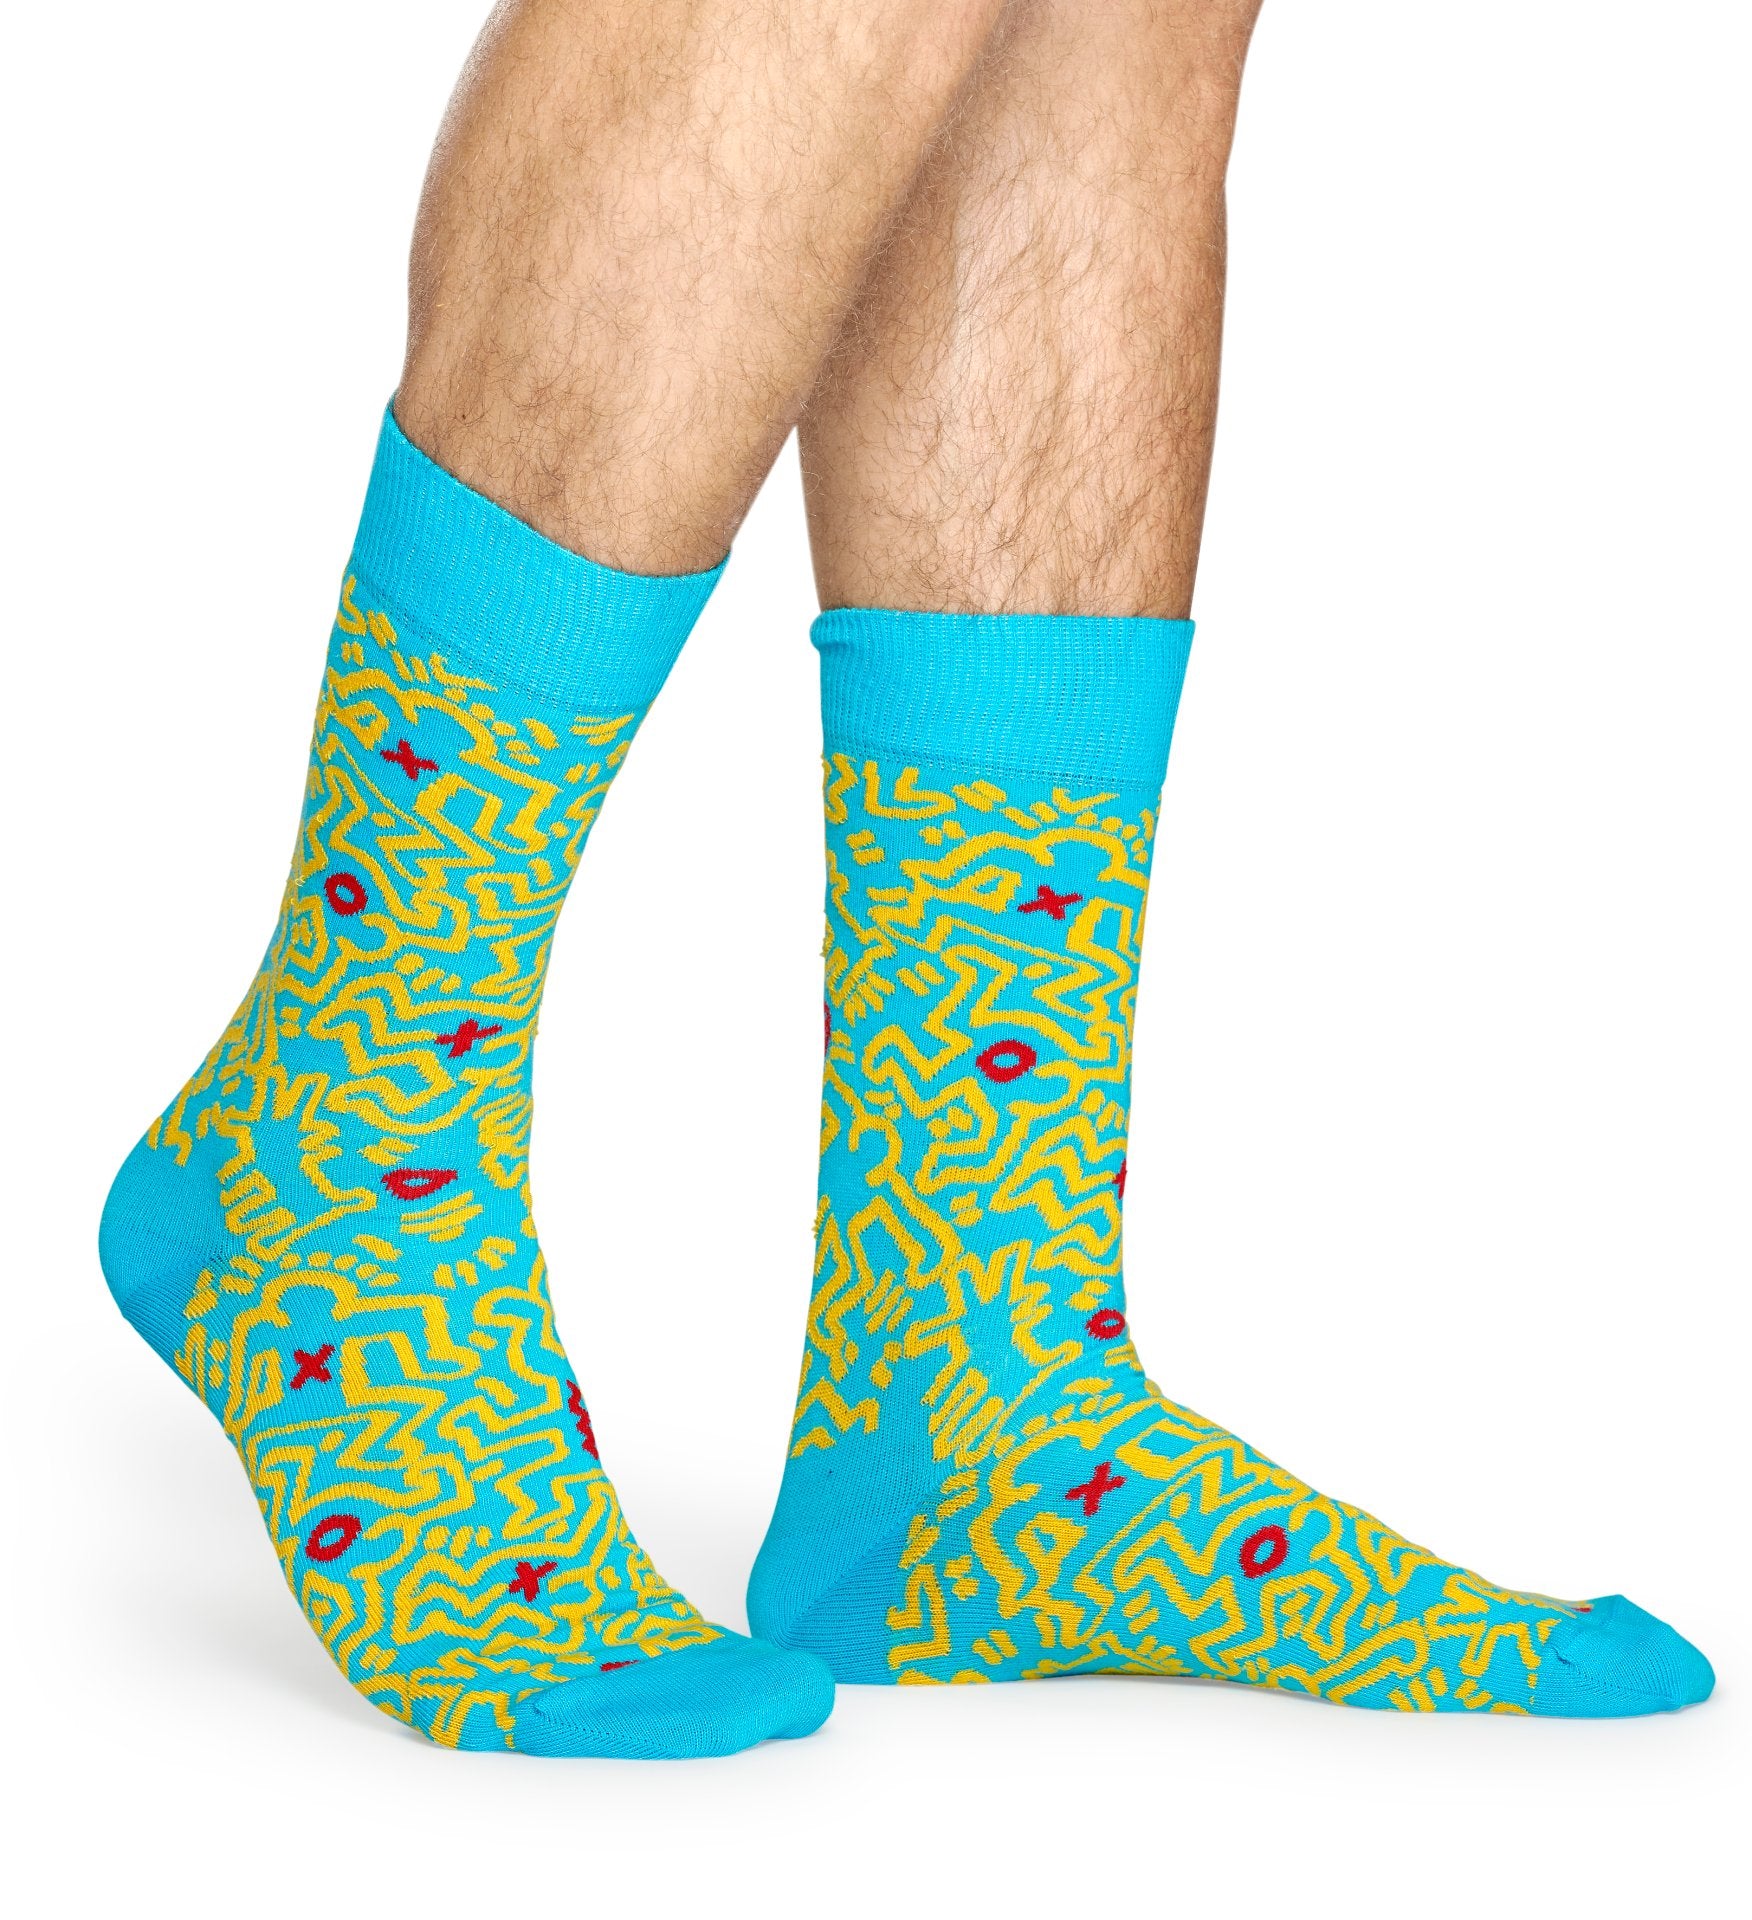 Modré ponožky z kolekce Happy Socks x Keith Haring, vzor All Over